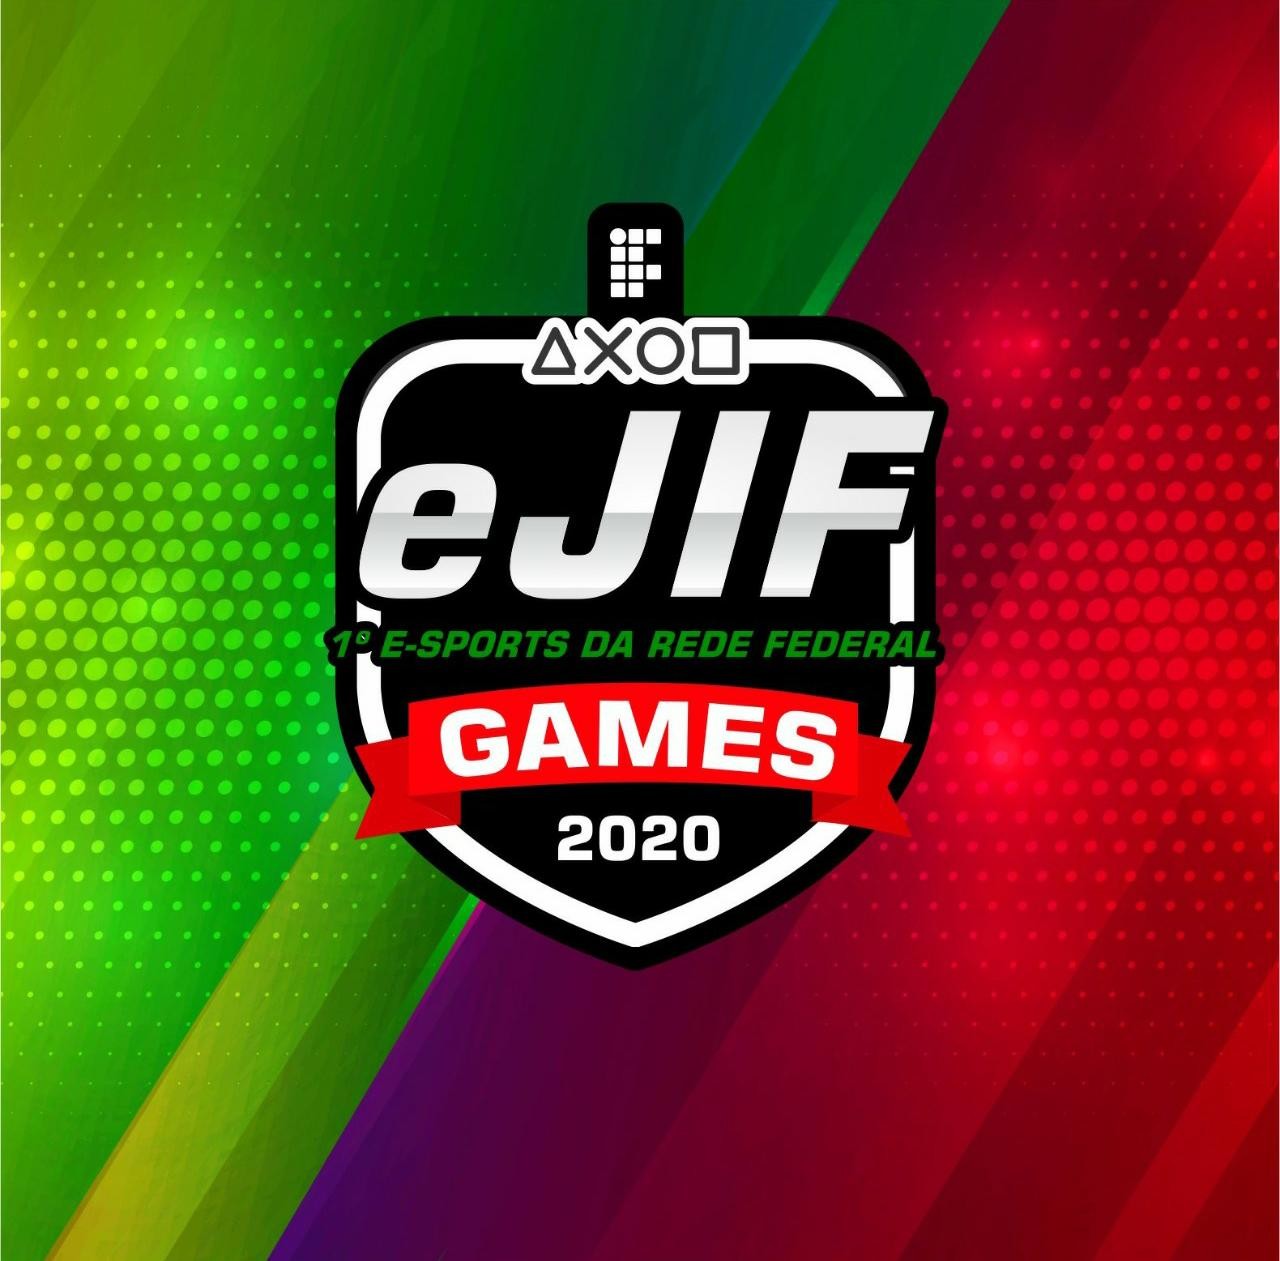 1 ejif games 2020